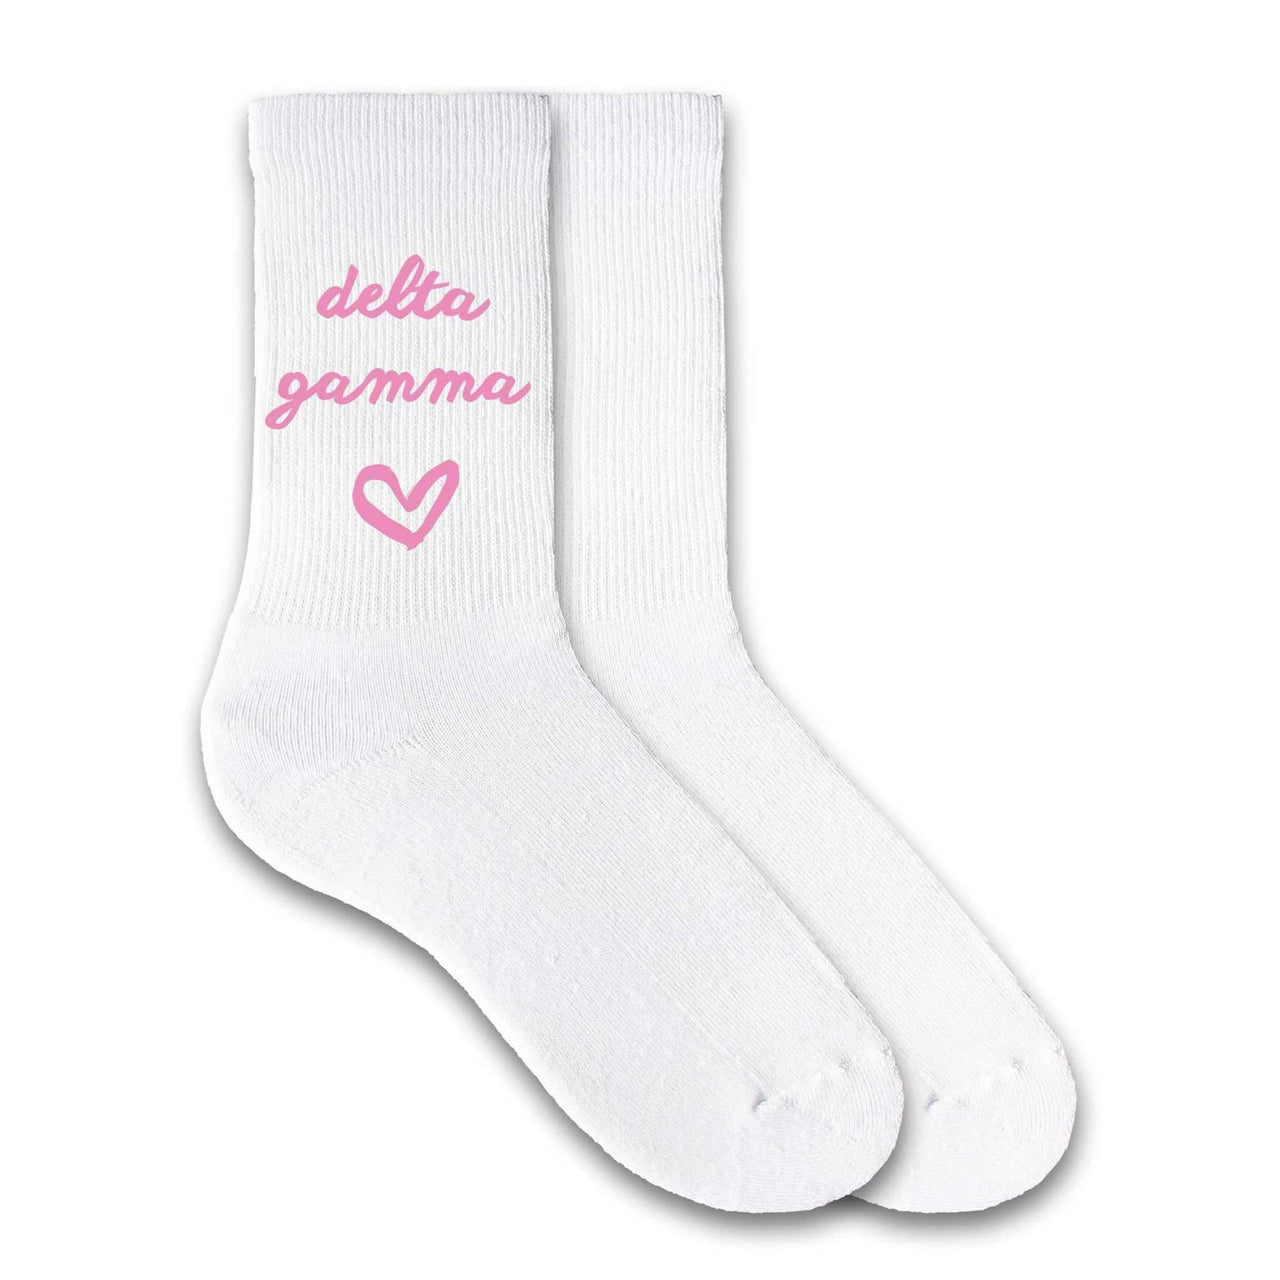 Delta Gamma sorority name with heart design custom printed on white cotton crew socks